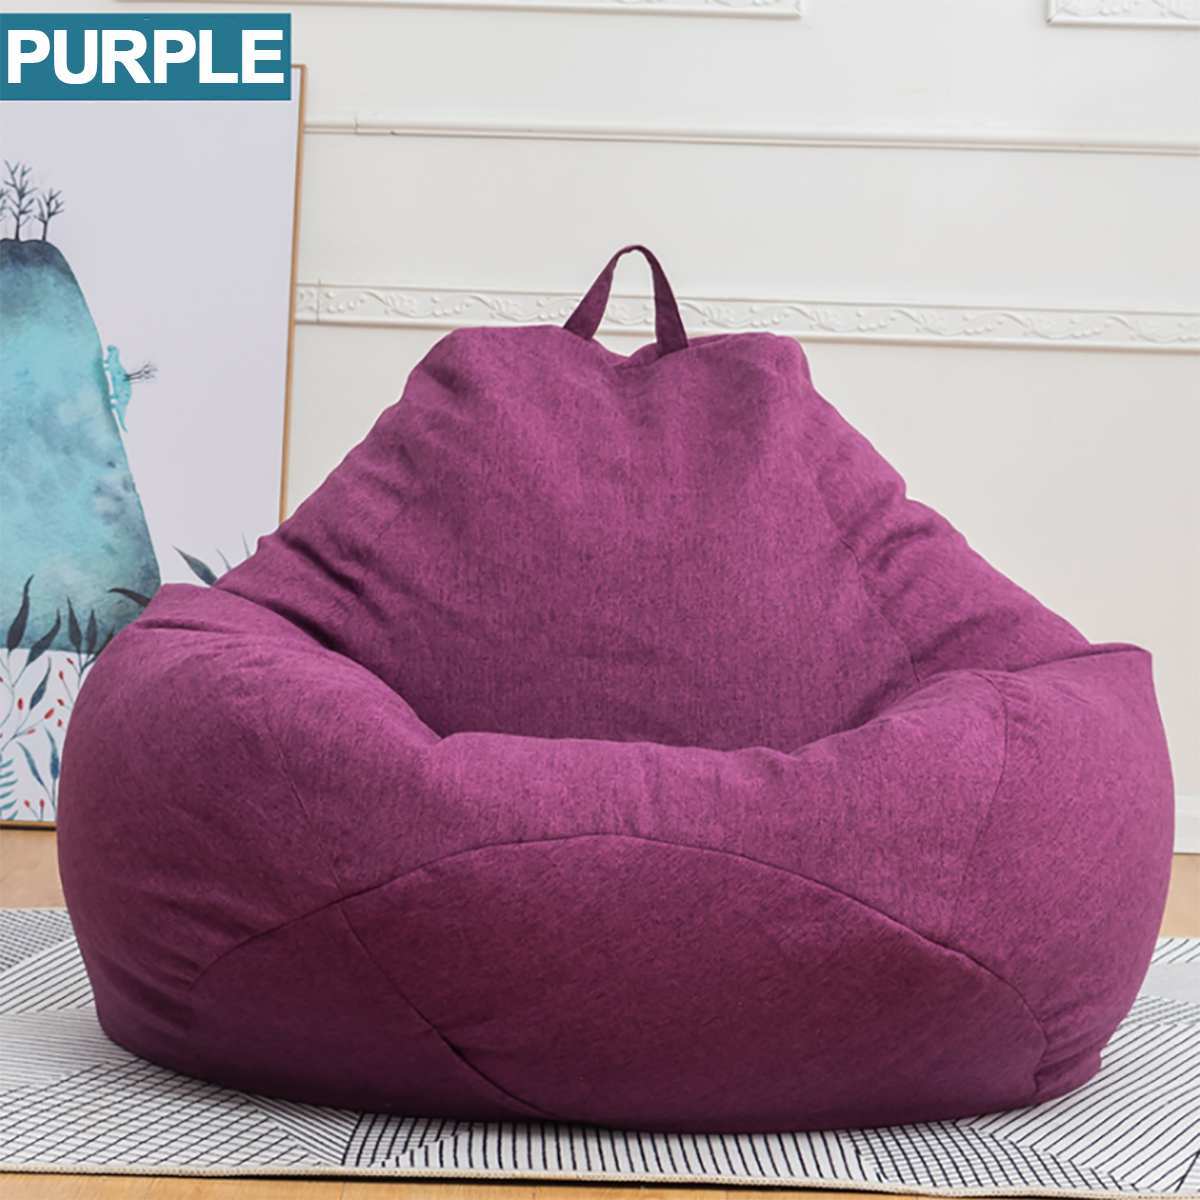 Comfortable Soft Giant Bean Bag Chair - MEDIJIX